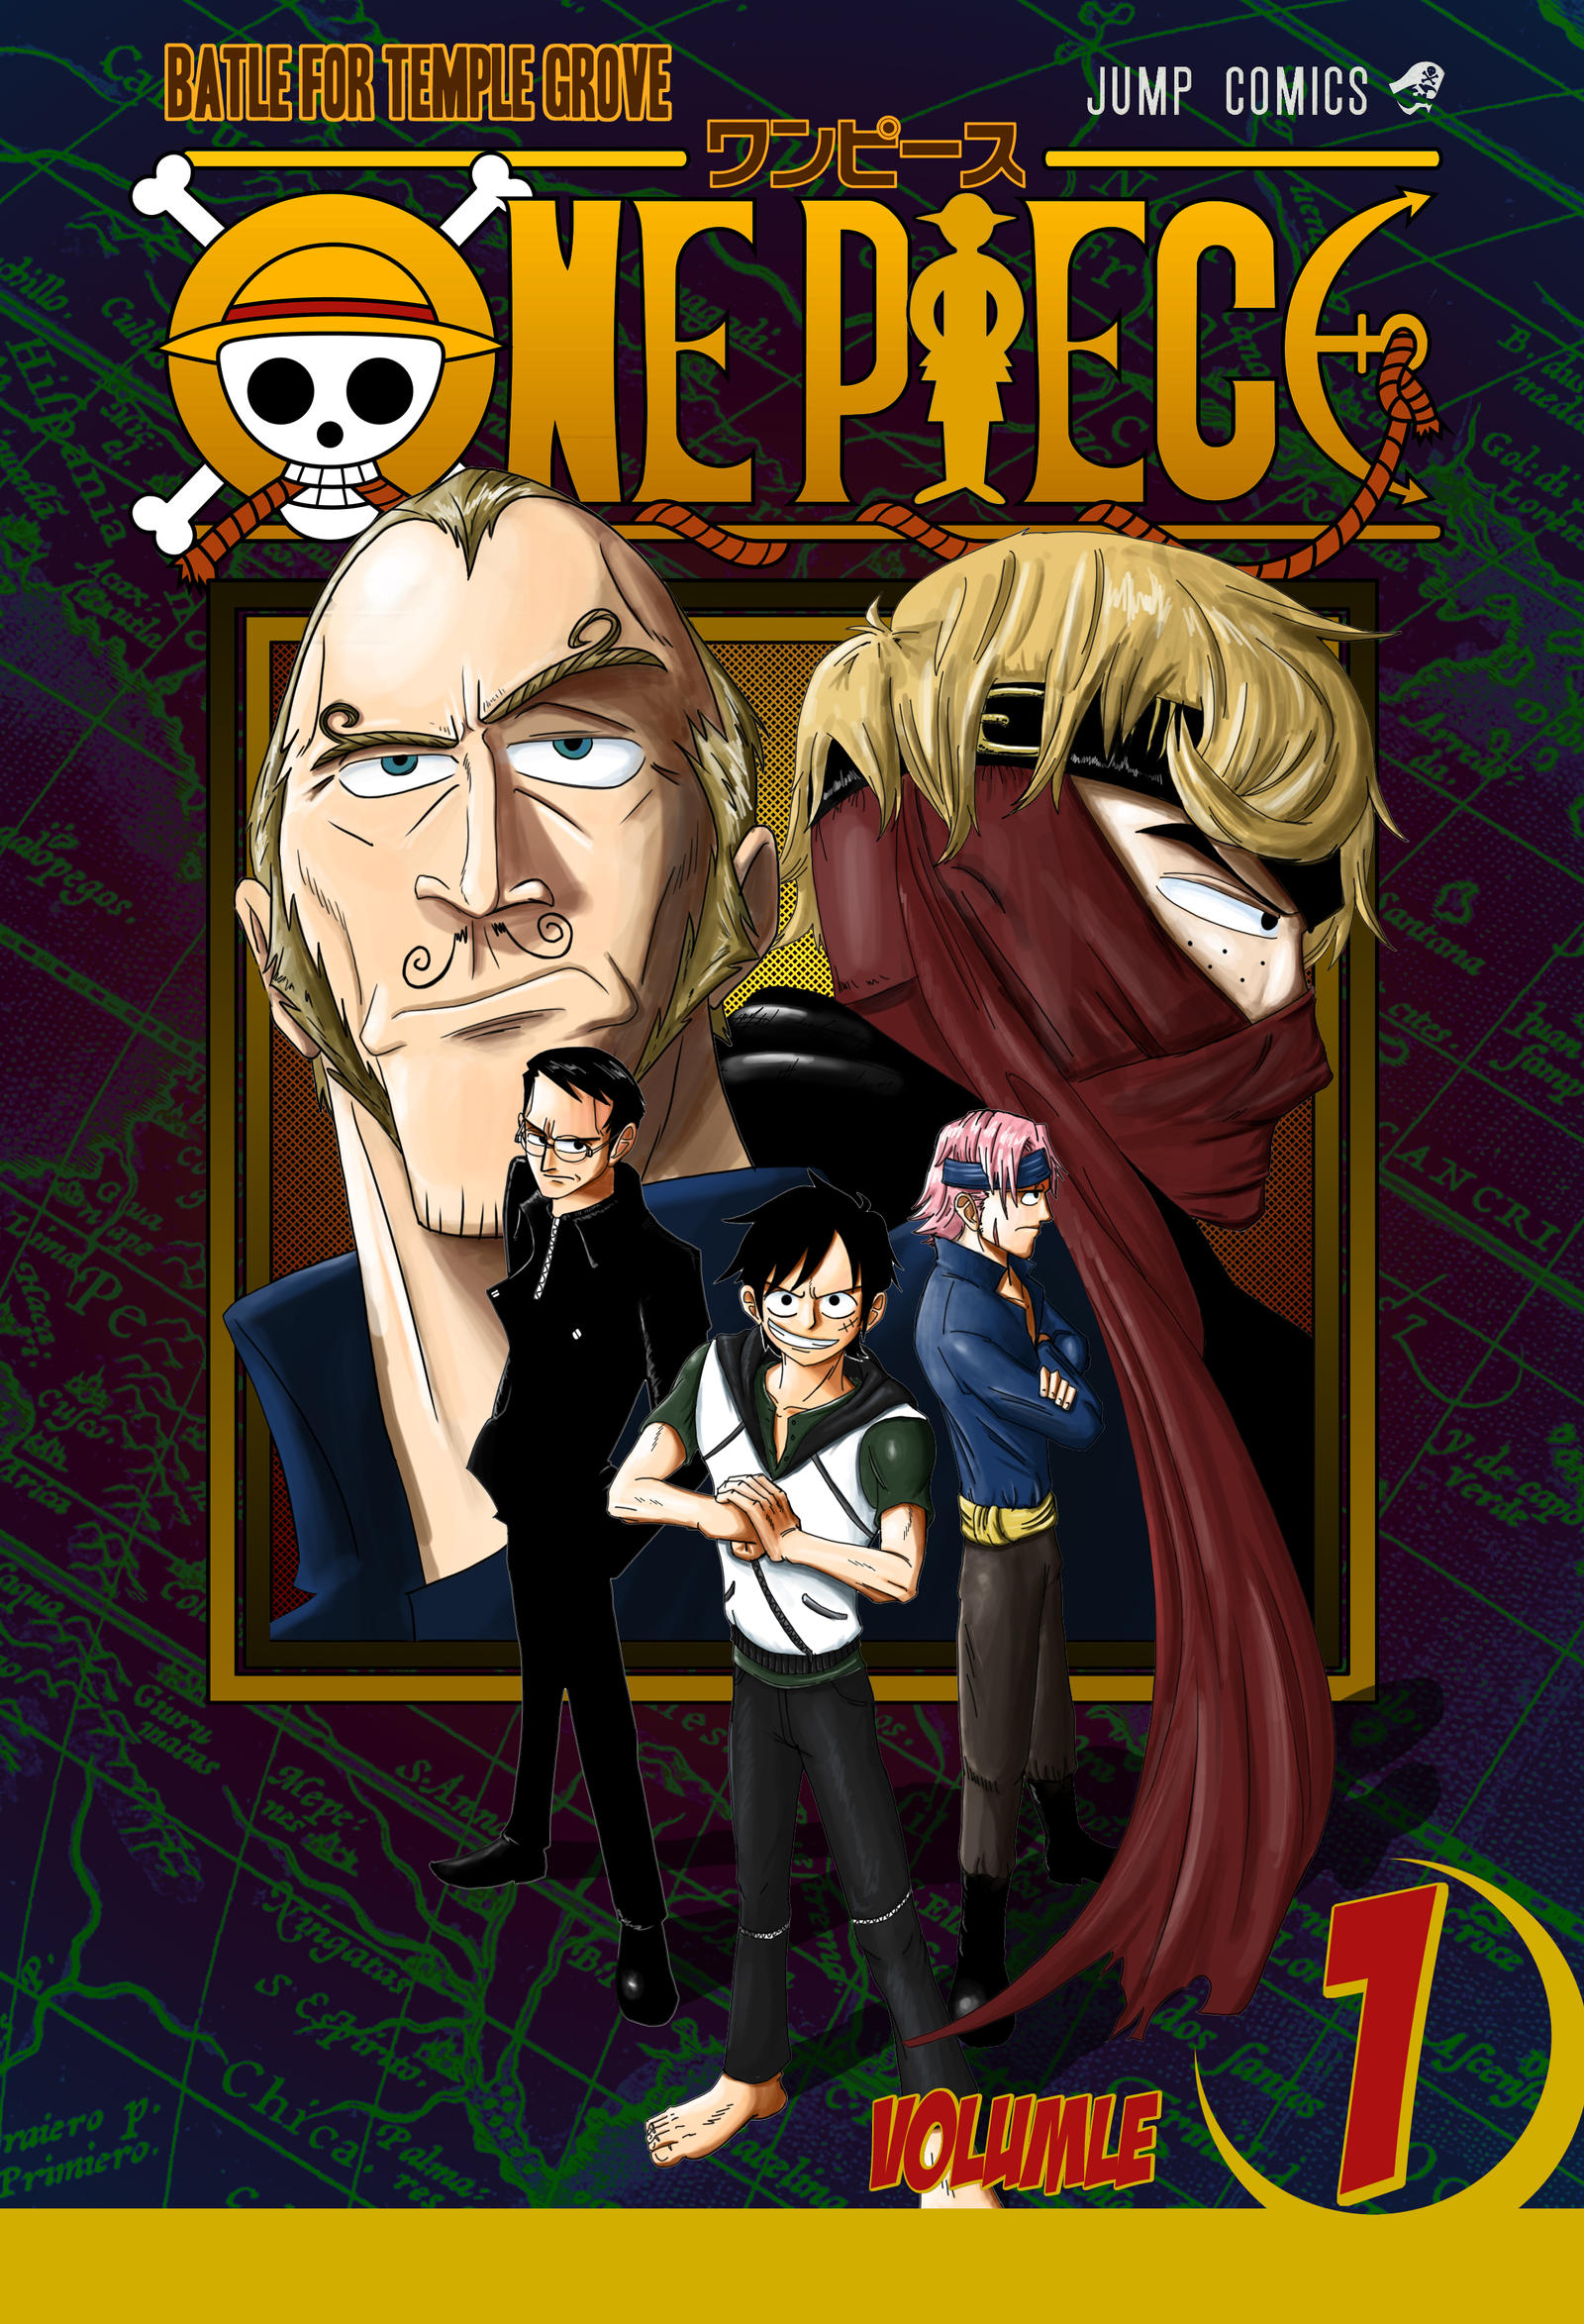 One Piece Fan Manga: Volume 1 Cover by vonmatrix5000 on DeviantArt